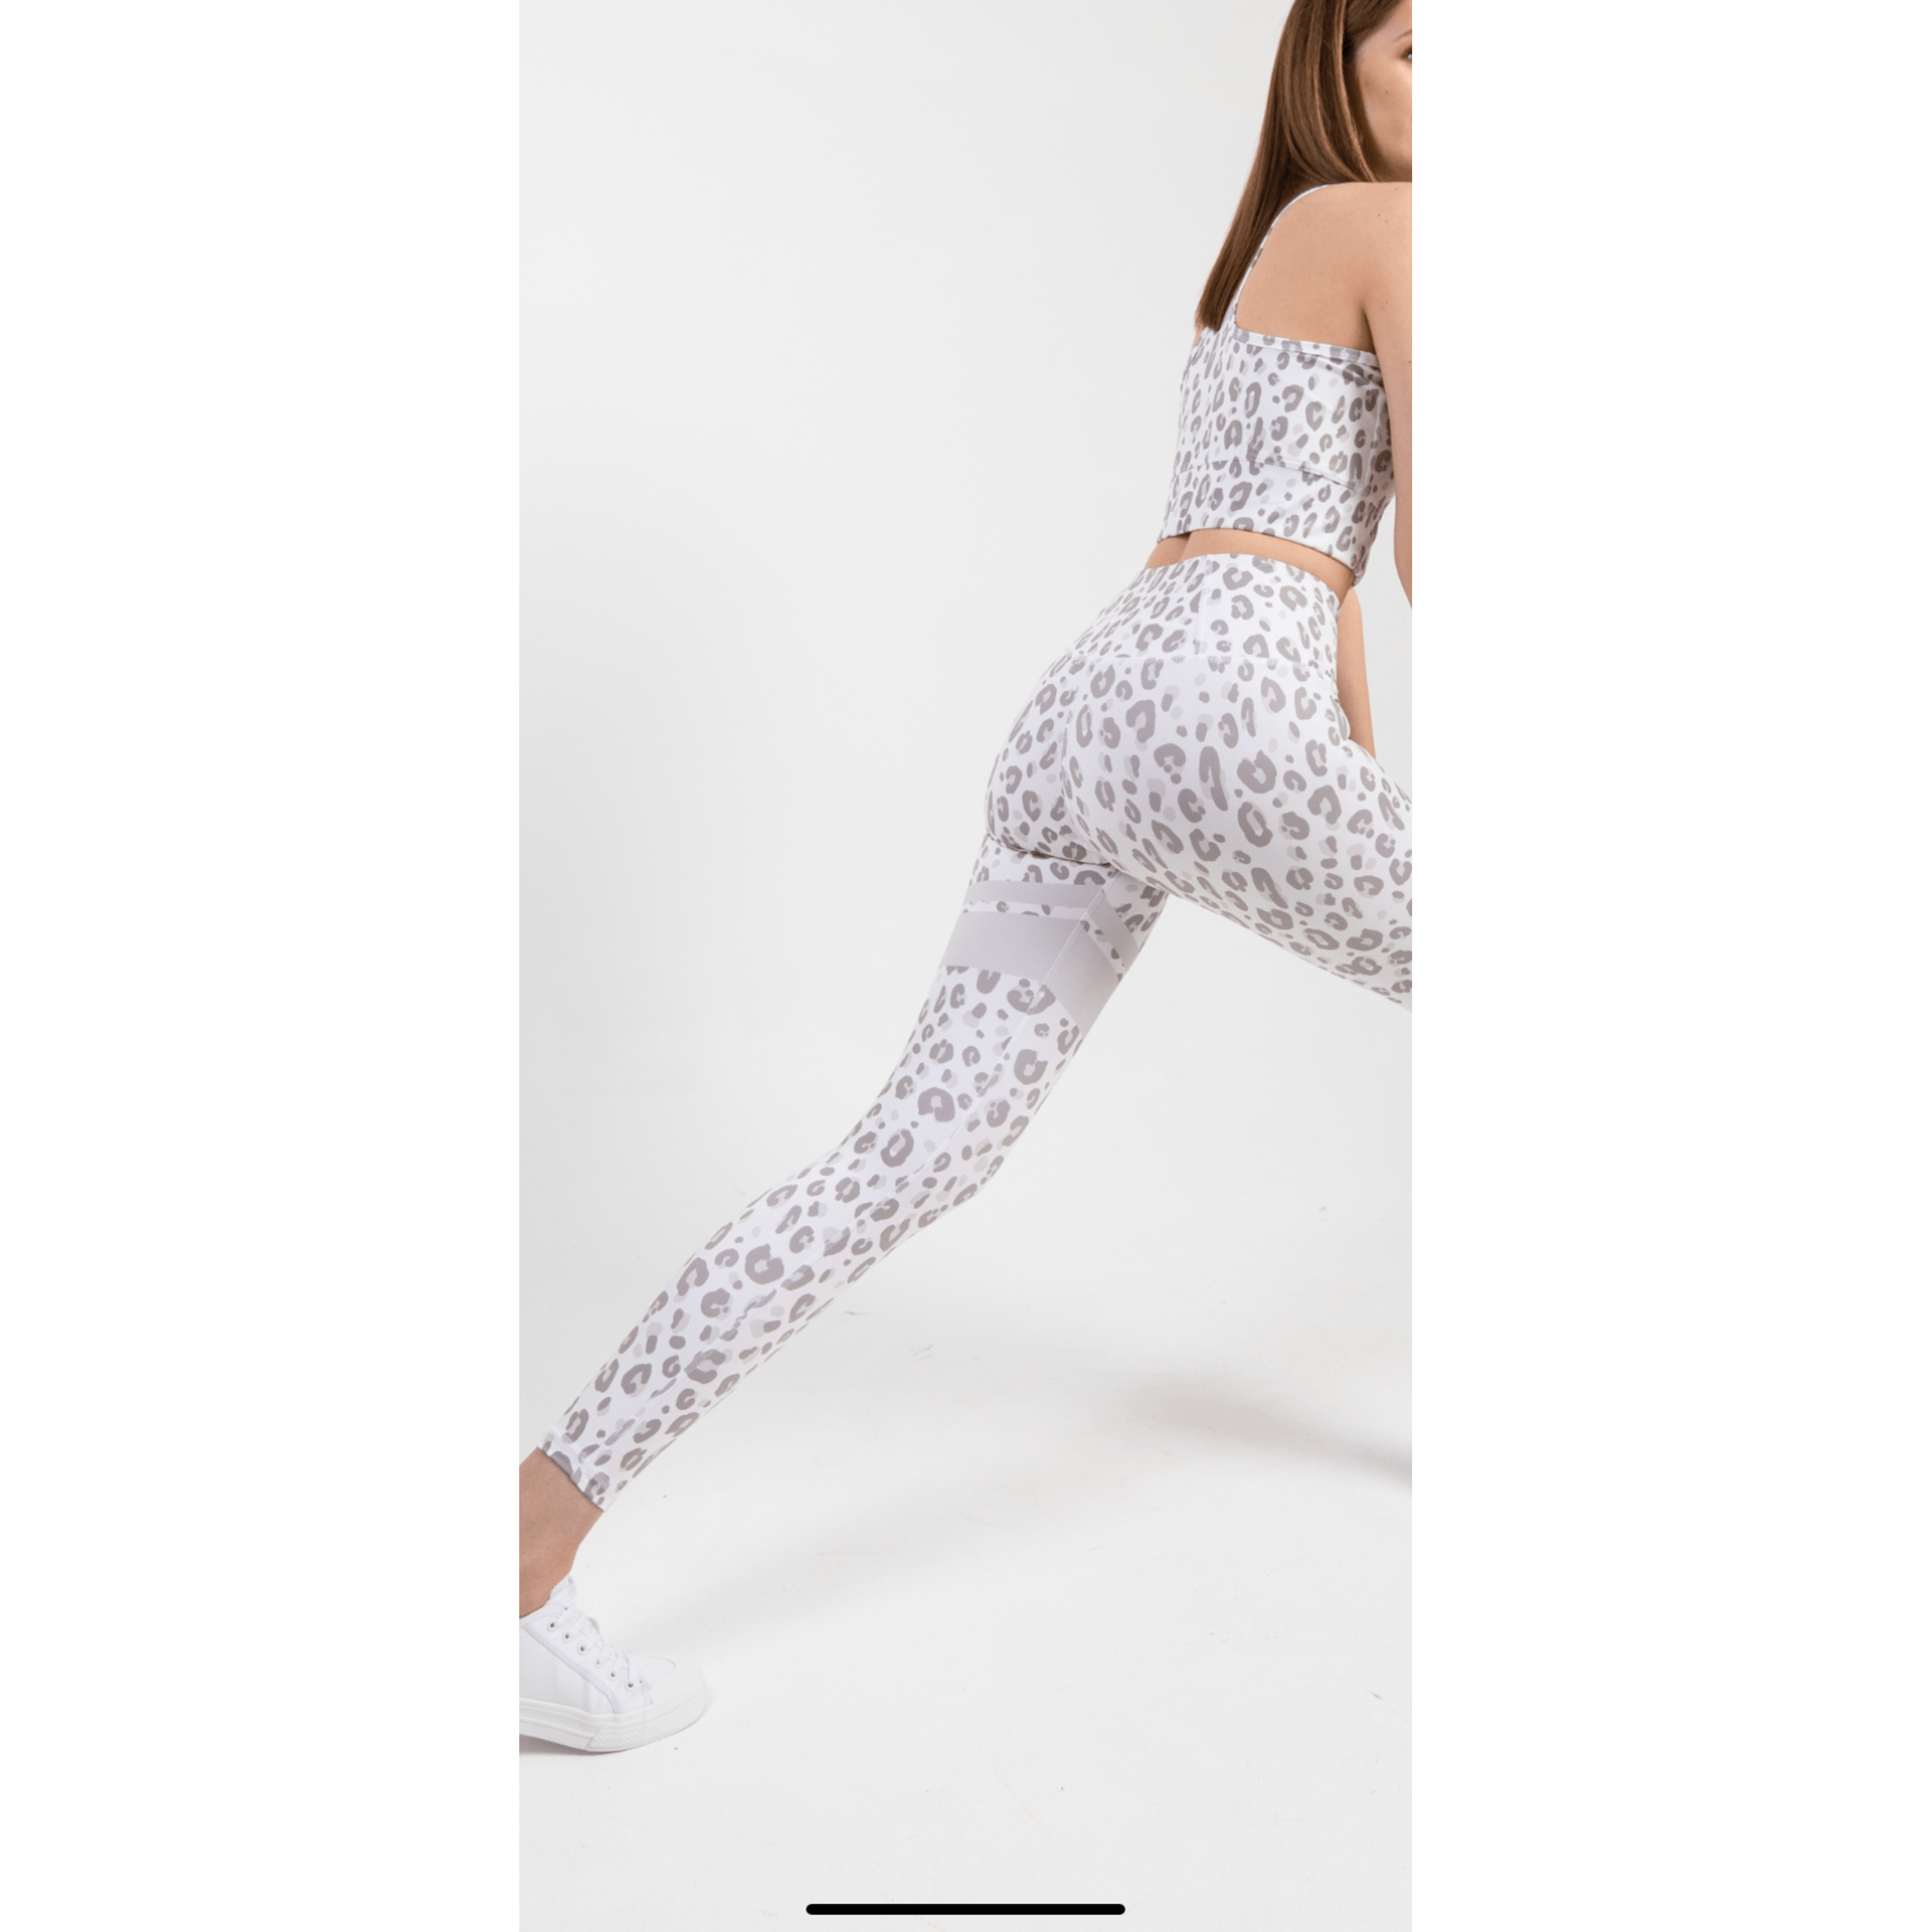 Mallas Fitness Peachperfect Panther - Animal Print - Fitness/yoga Woman  MKP